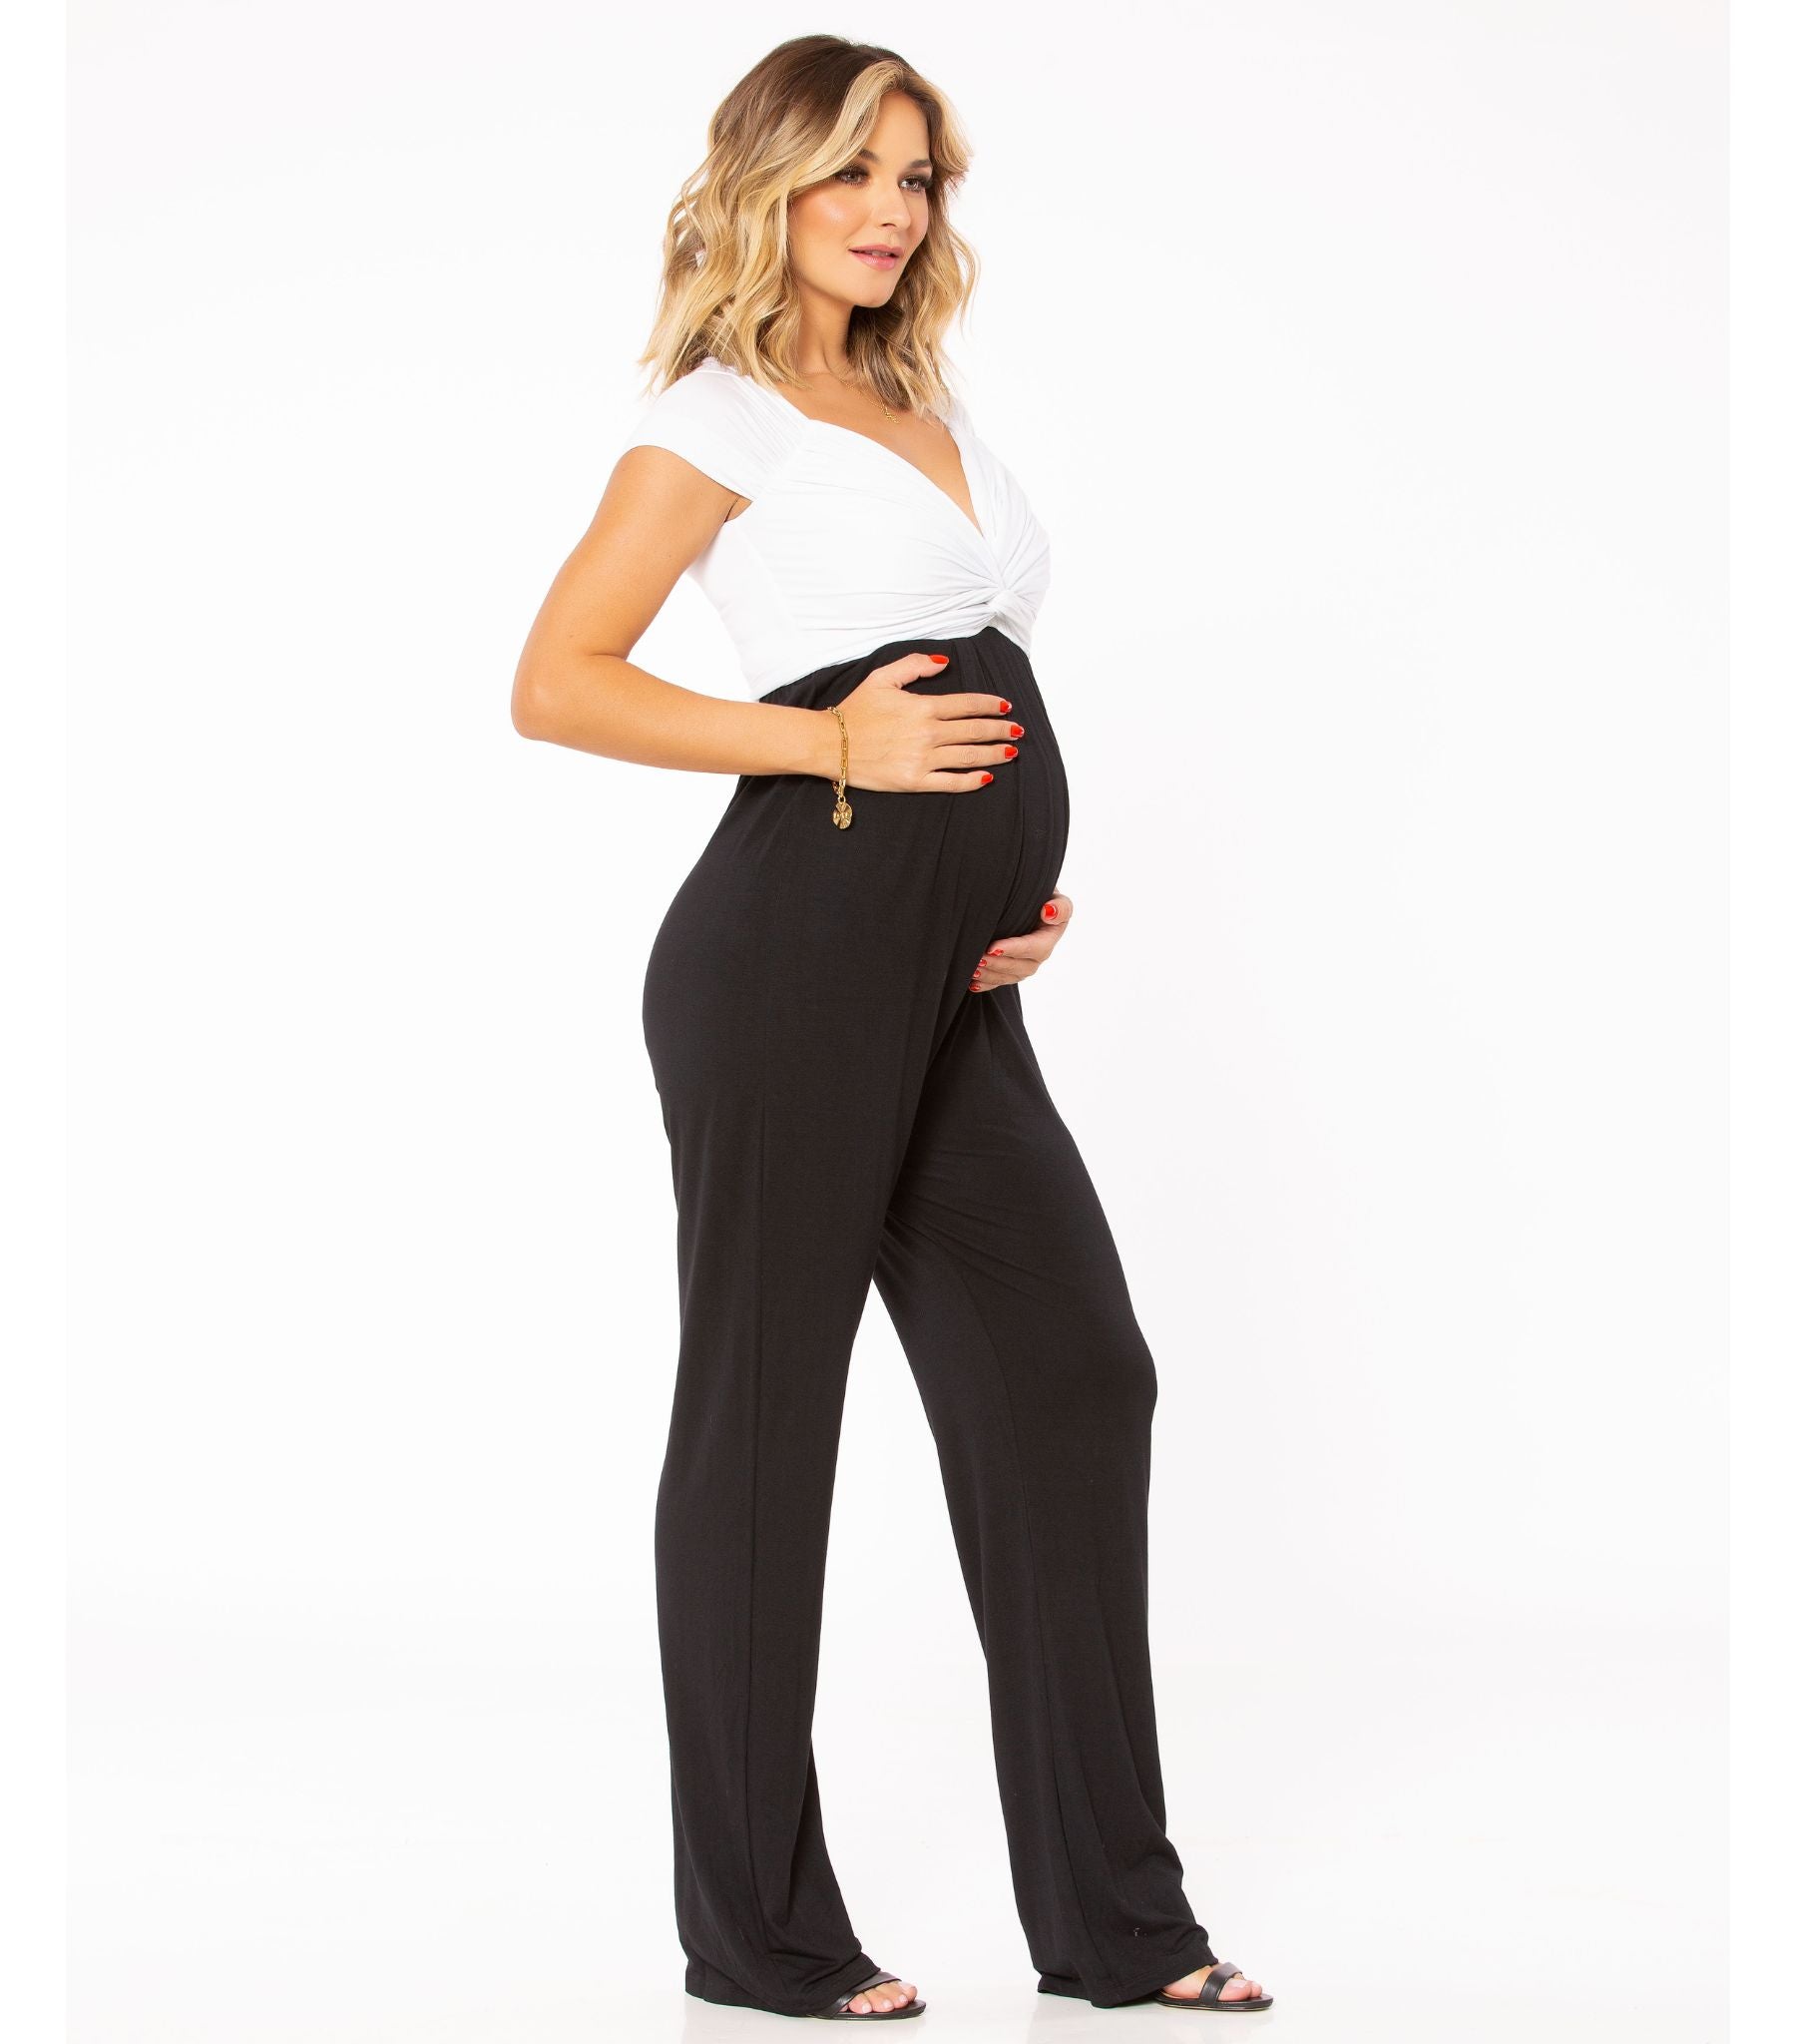 Maternity Jumpsuit with Wrap Nursing Top - Black & White